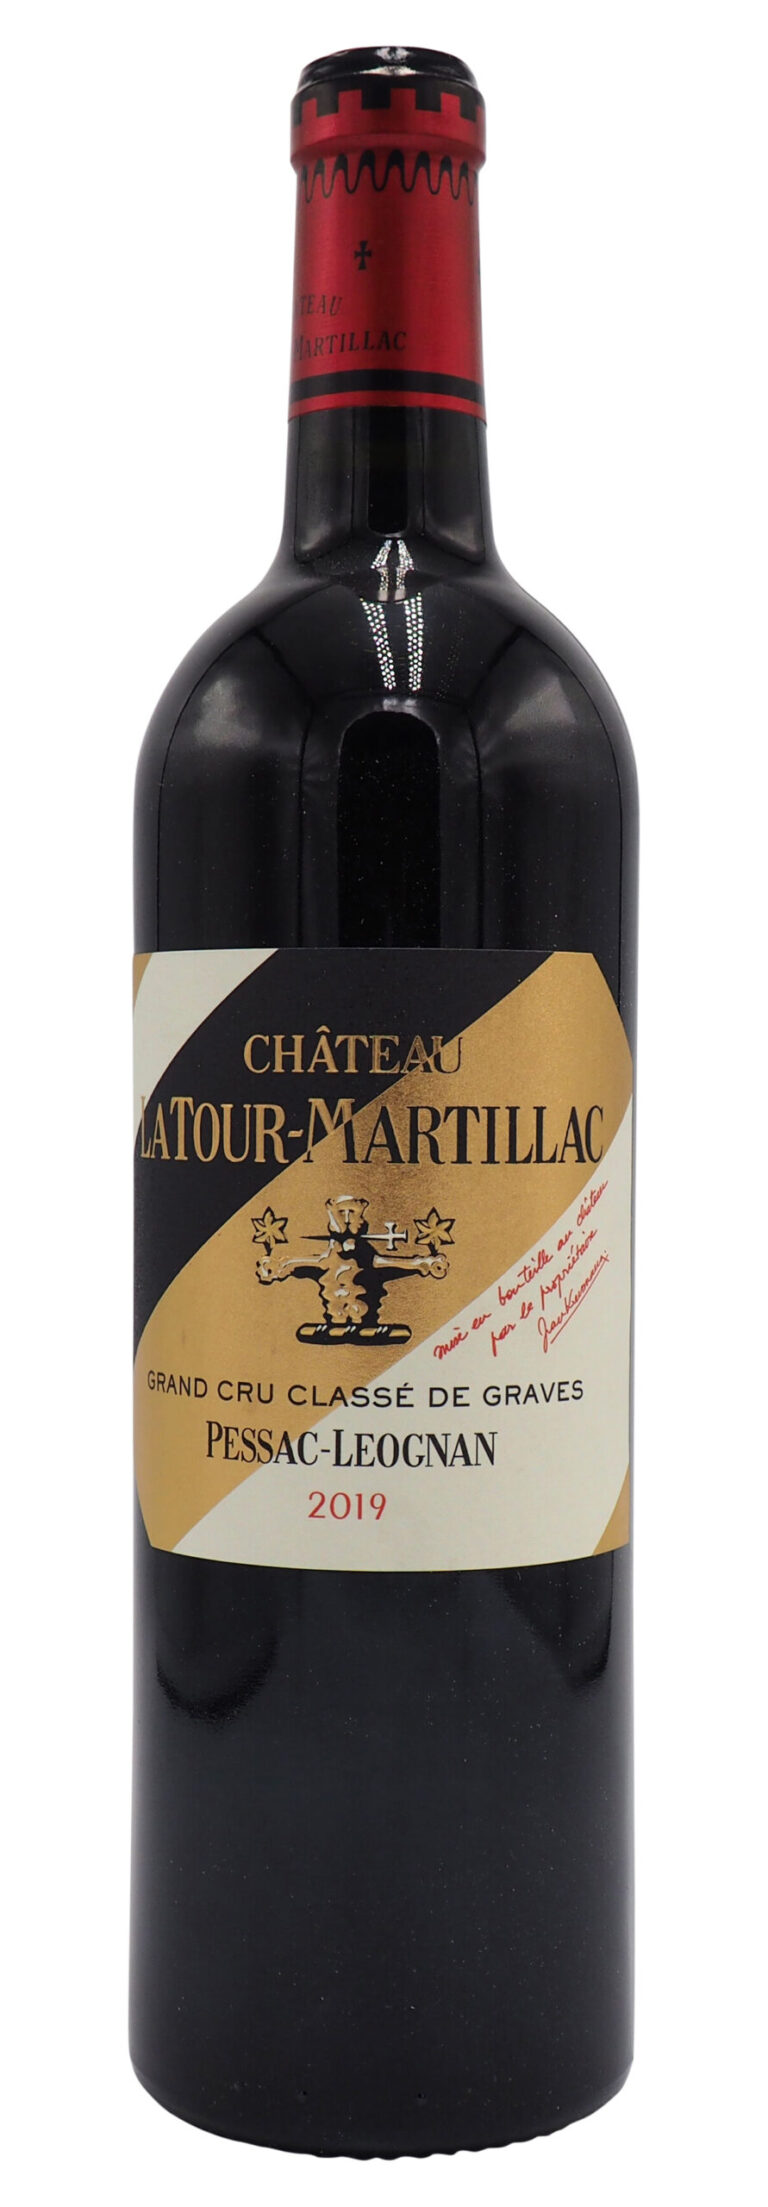 Château Latour-Martillac Pessac-Leognan 2019